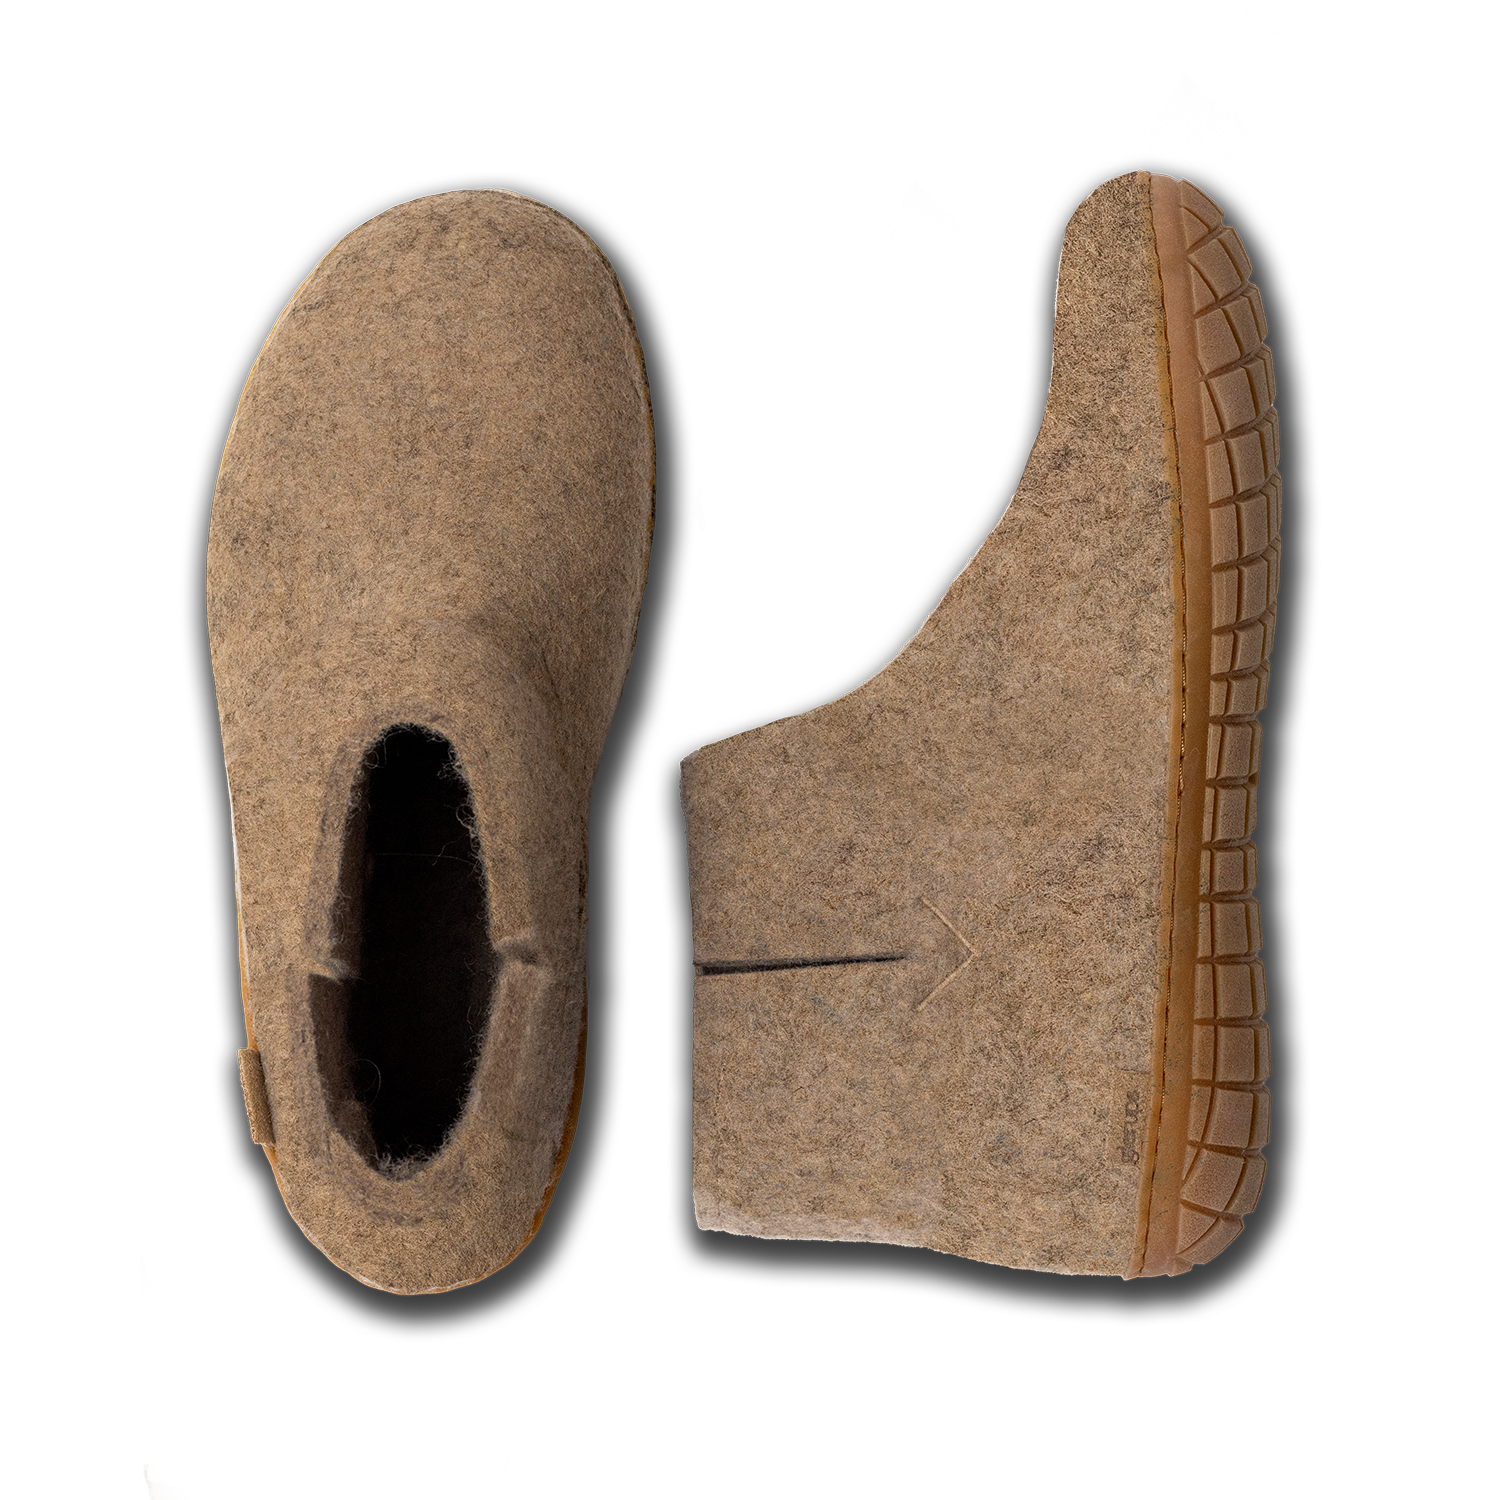 Glerups Boot Sand - Rubber Sole